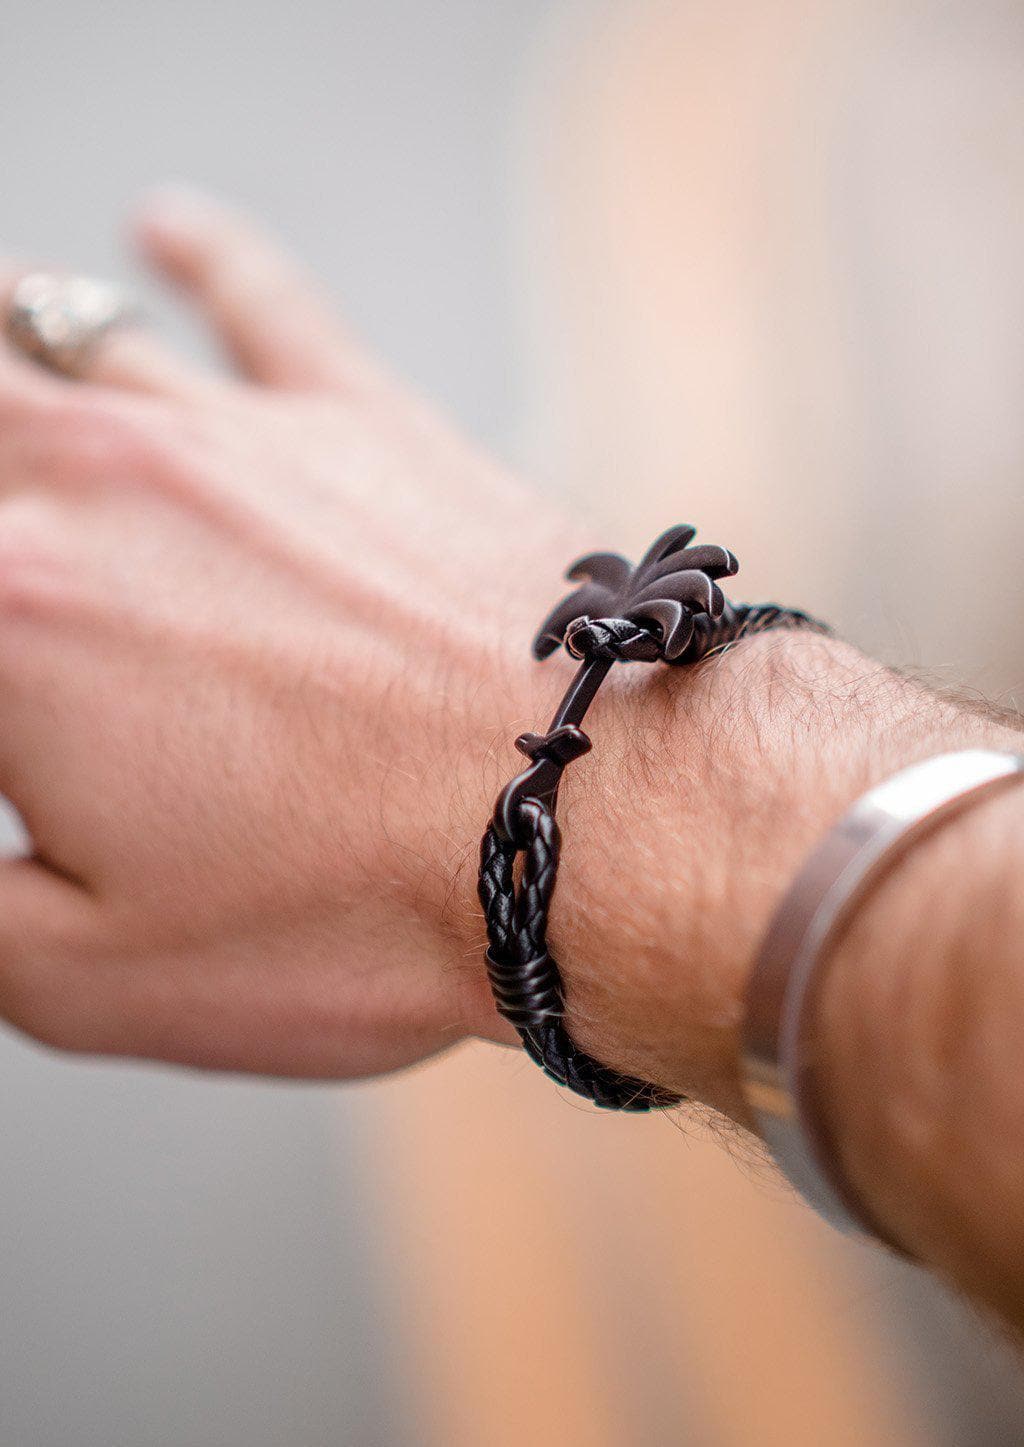 Pitch Black - Palm anchor bracelet with black leather. Lifestyle photo on wrist.